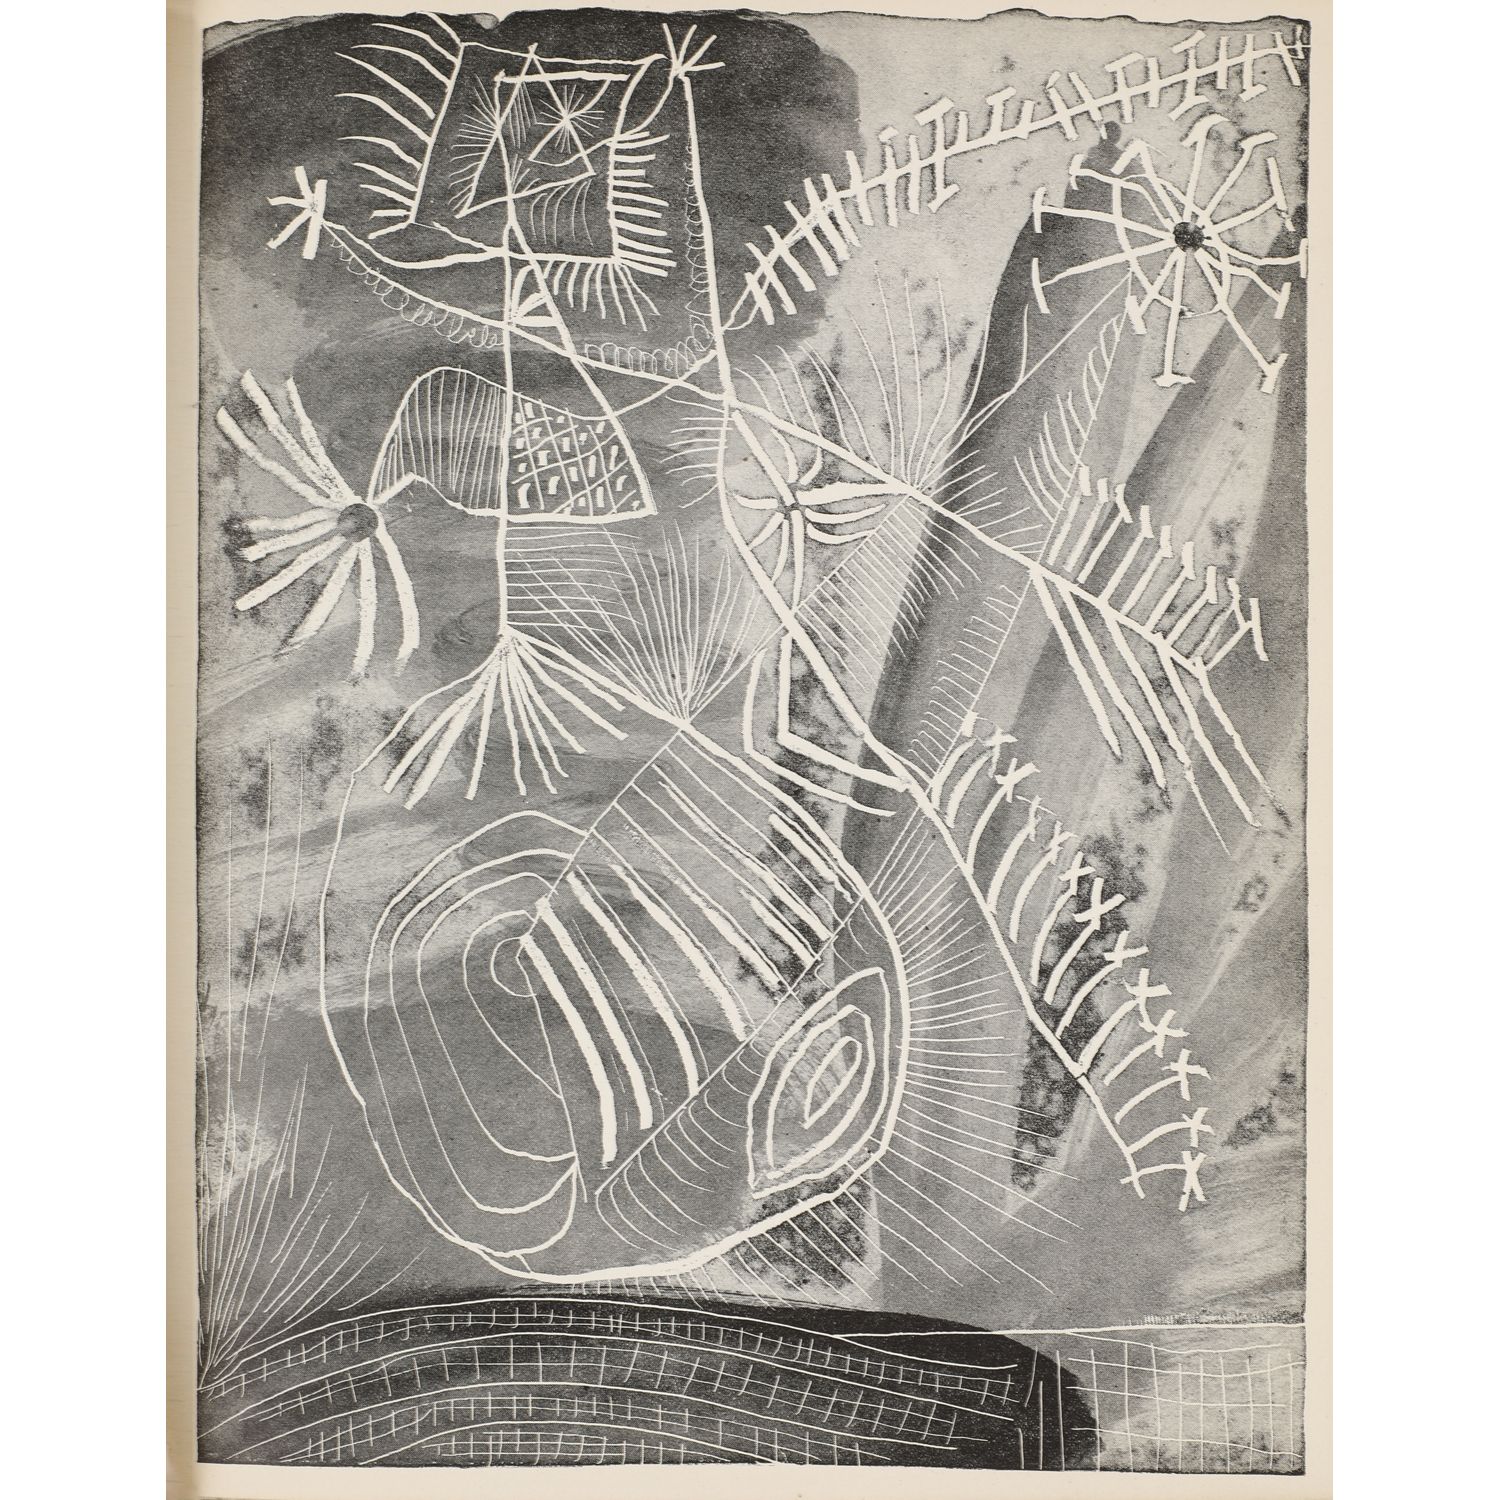 Pablo Picasso (1881-1973) Georges Hugnet (1906-1974) 巴勃罗-毕加索 (1881-1973)

乔治-雨果 &hellip;